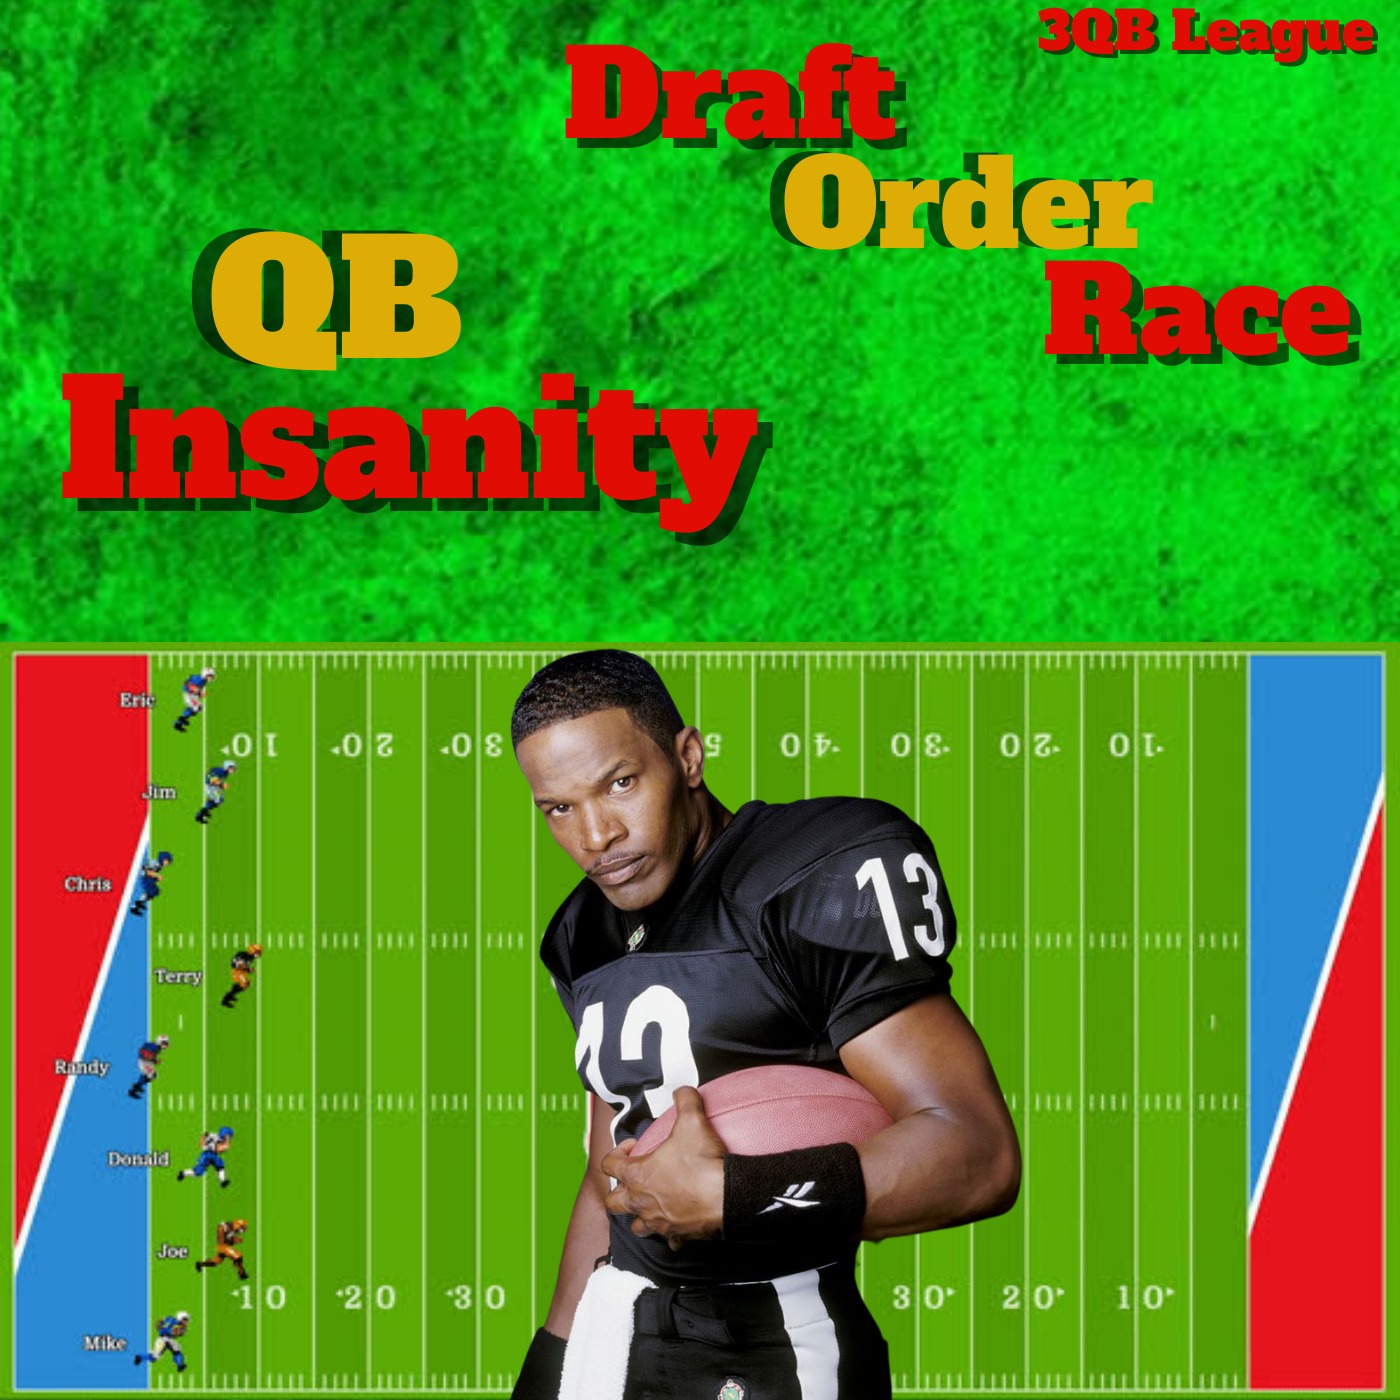 QB Insanity League Draft Order Race, 3QB League